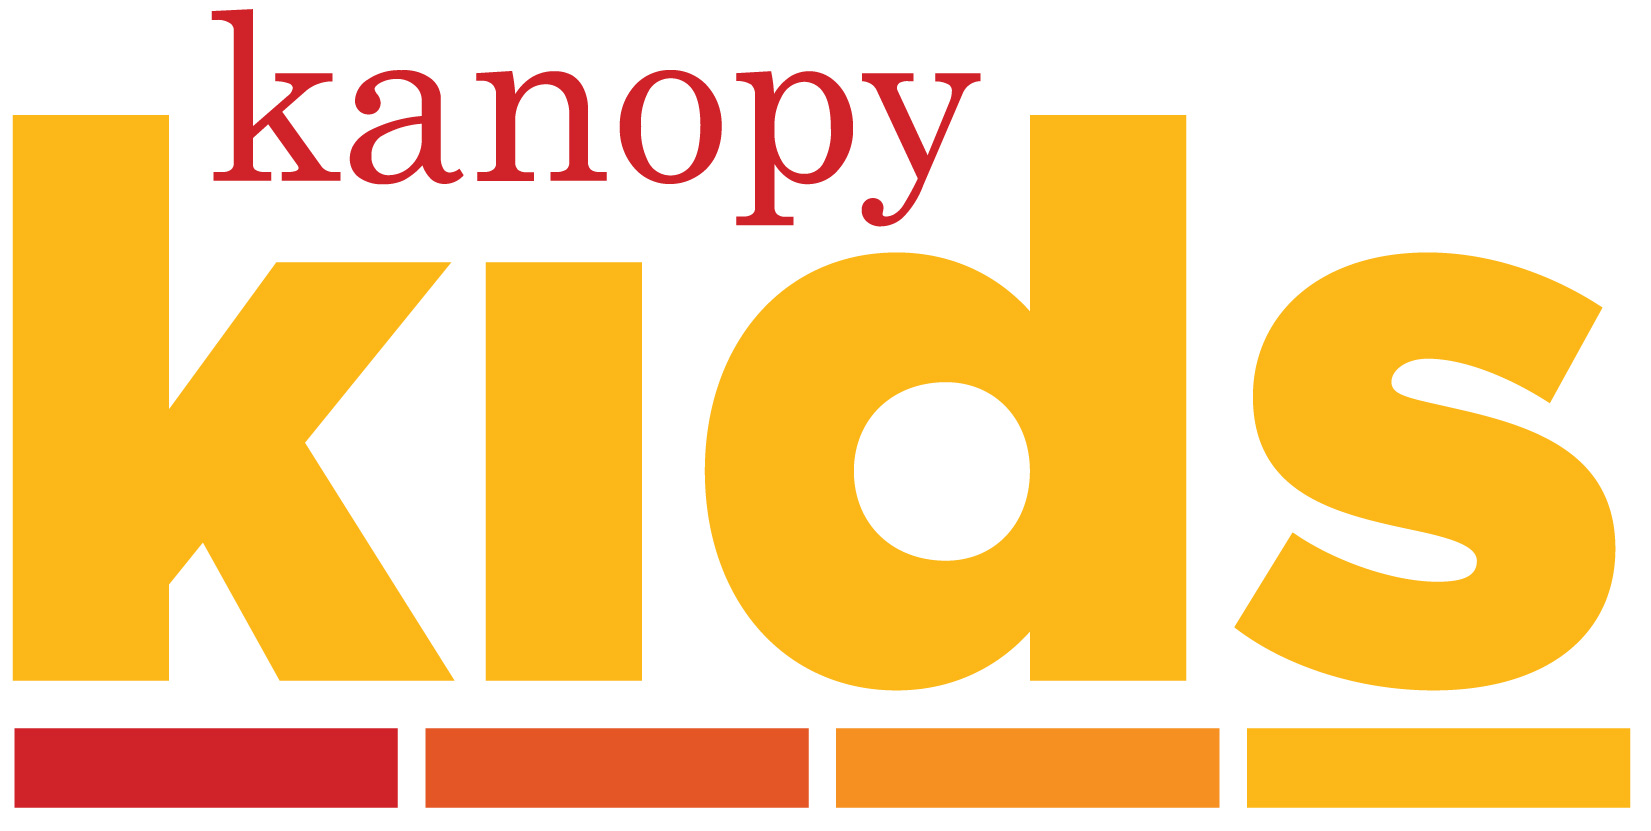 Image for "Kanopy Kids"